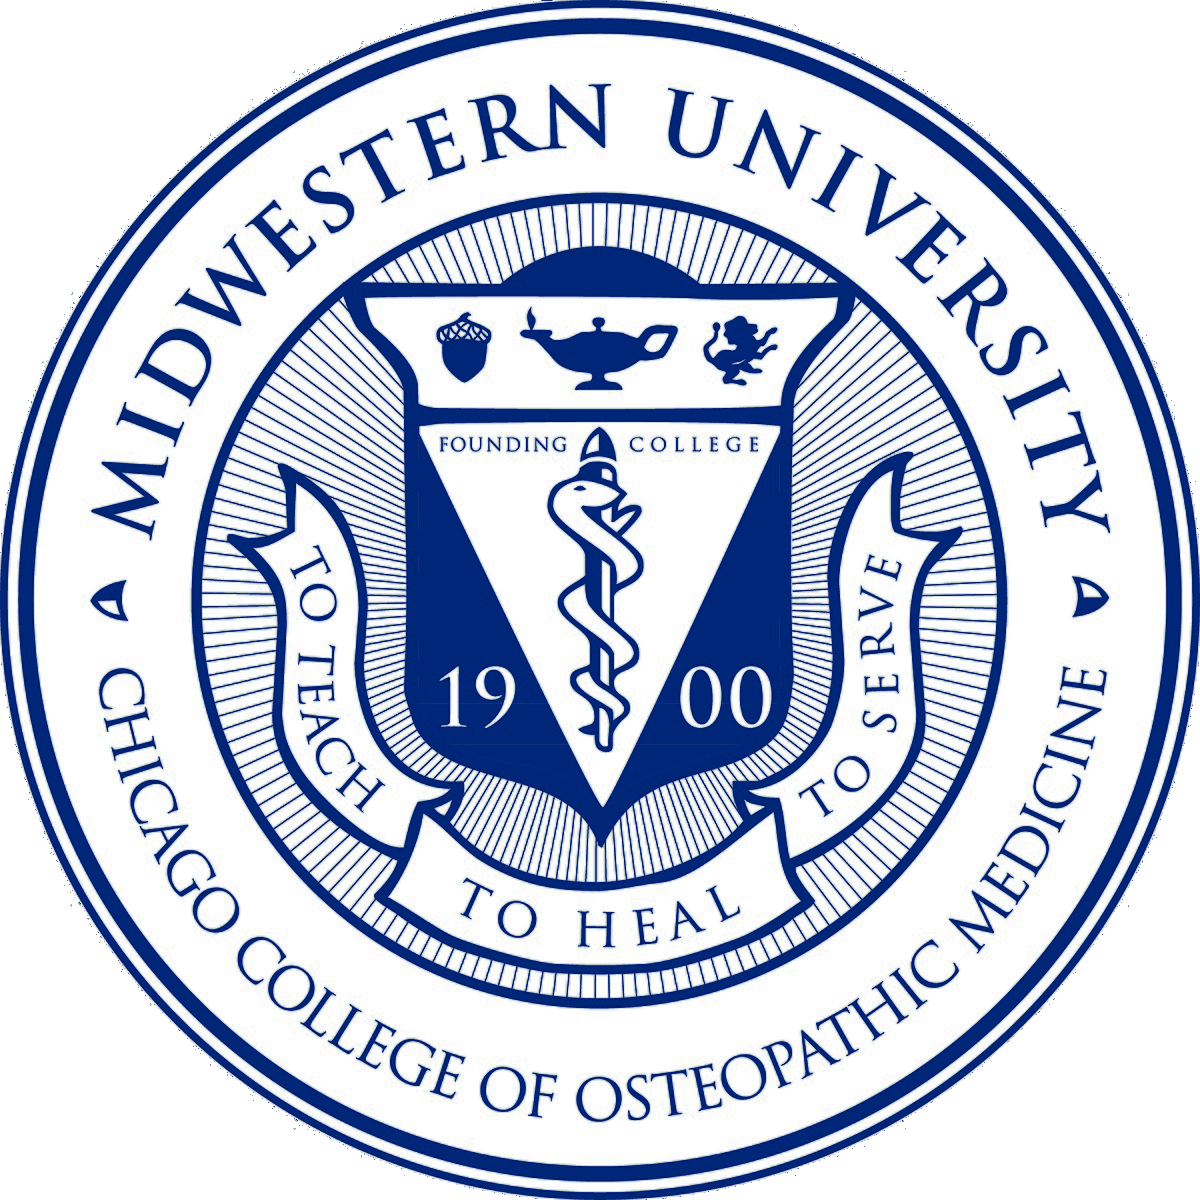 Midwestern university logo